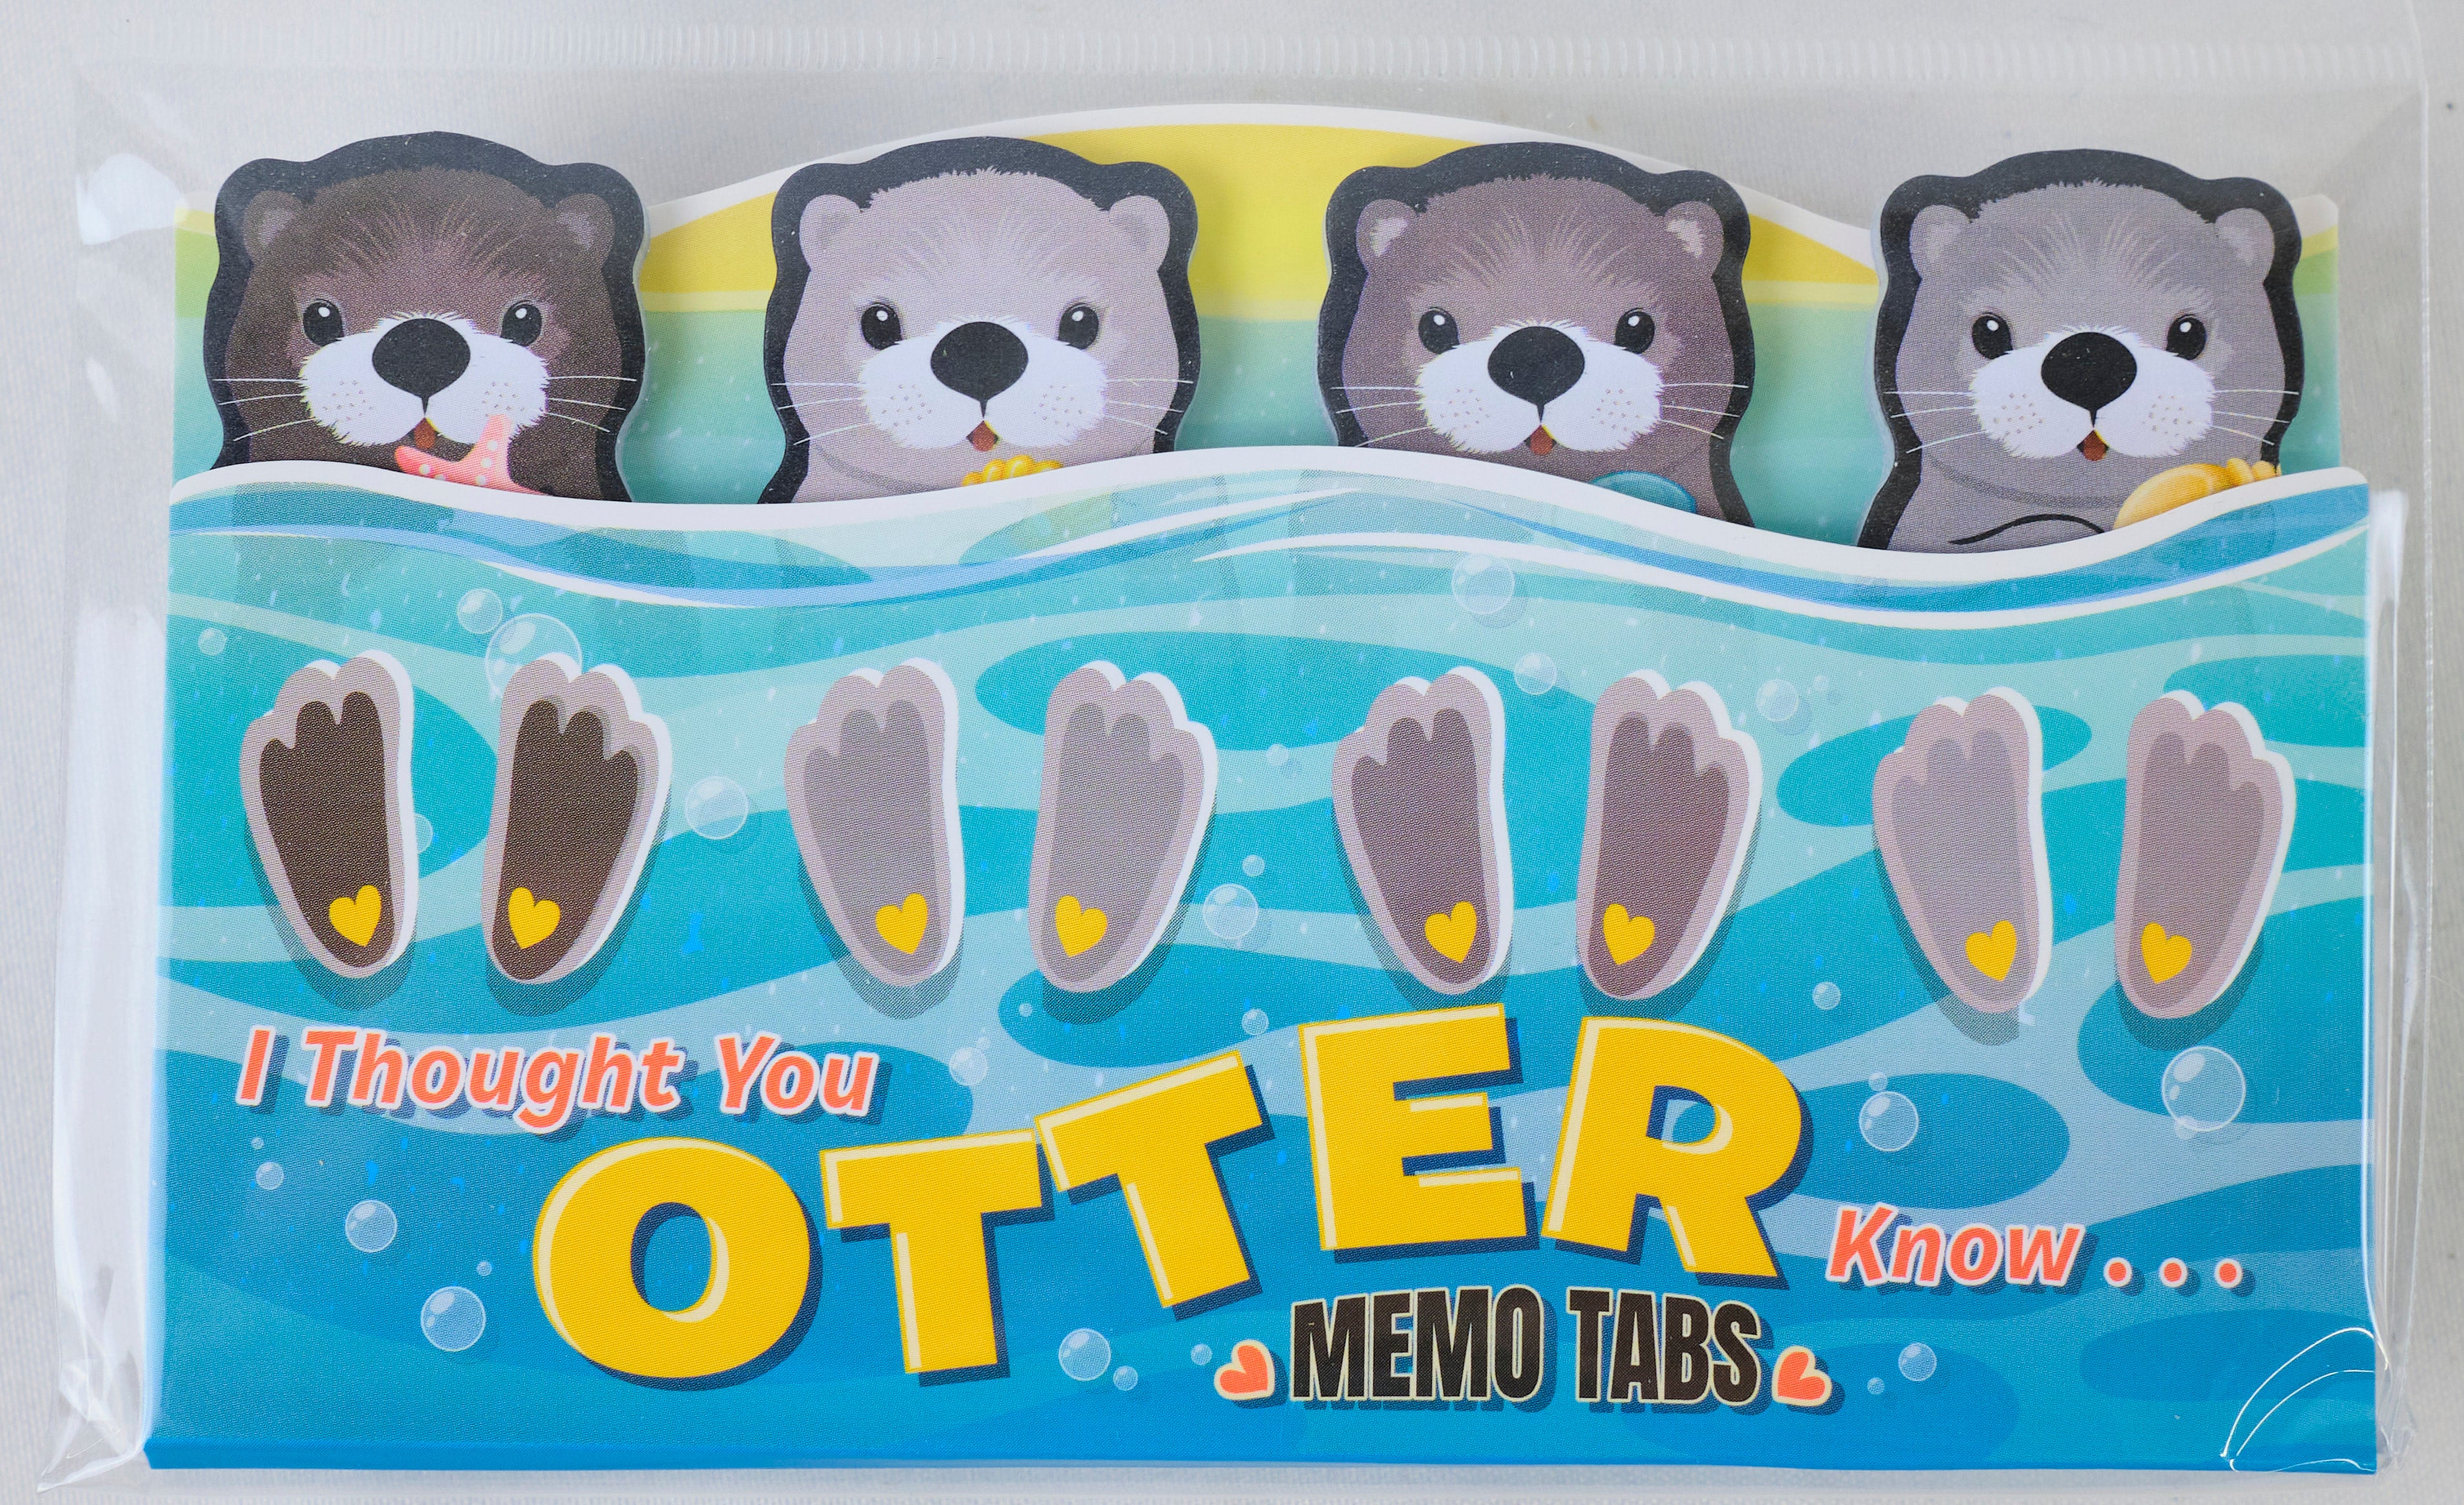 Sea Otter Memo Tabs